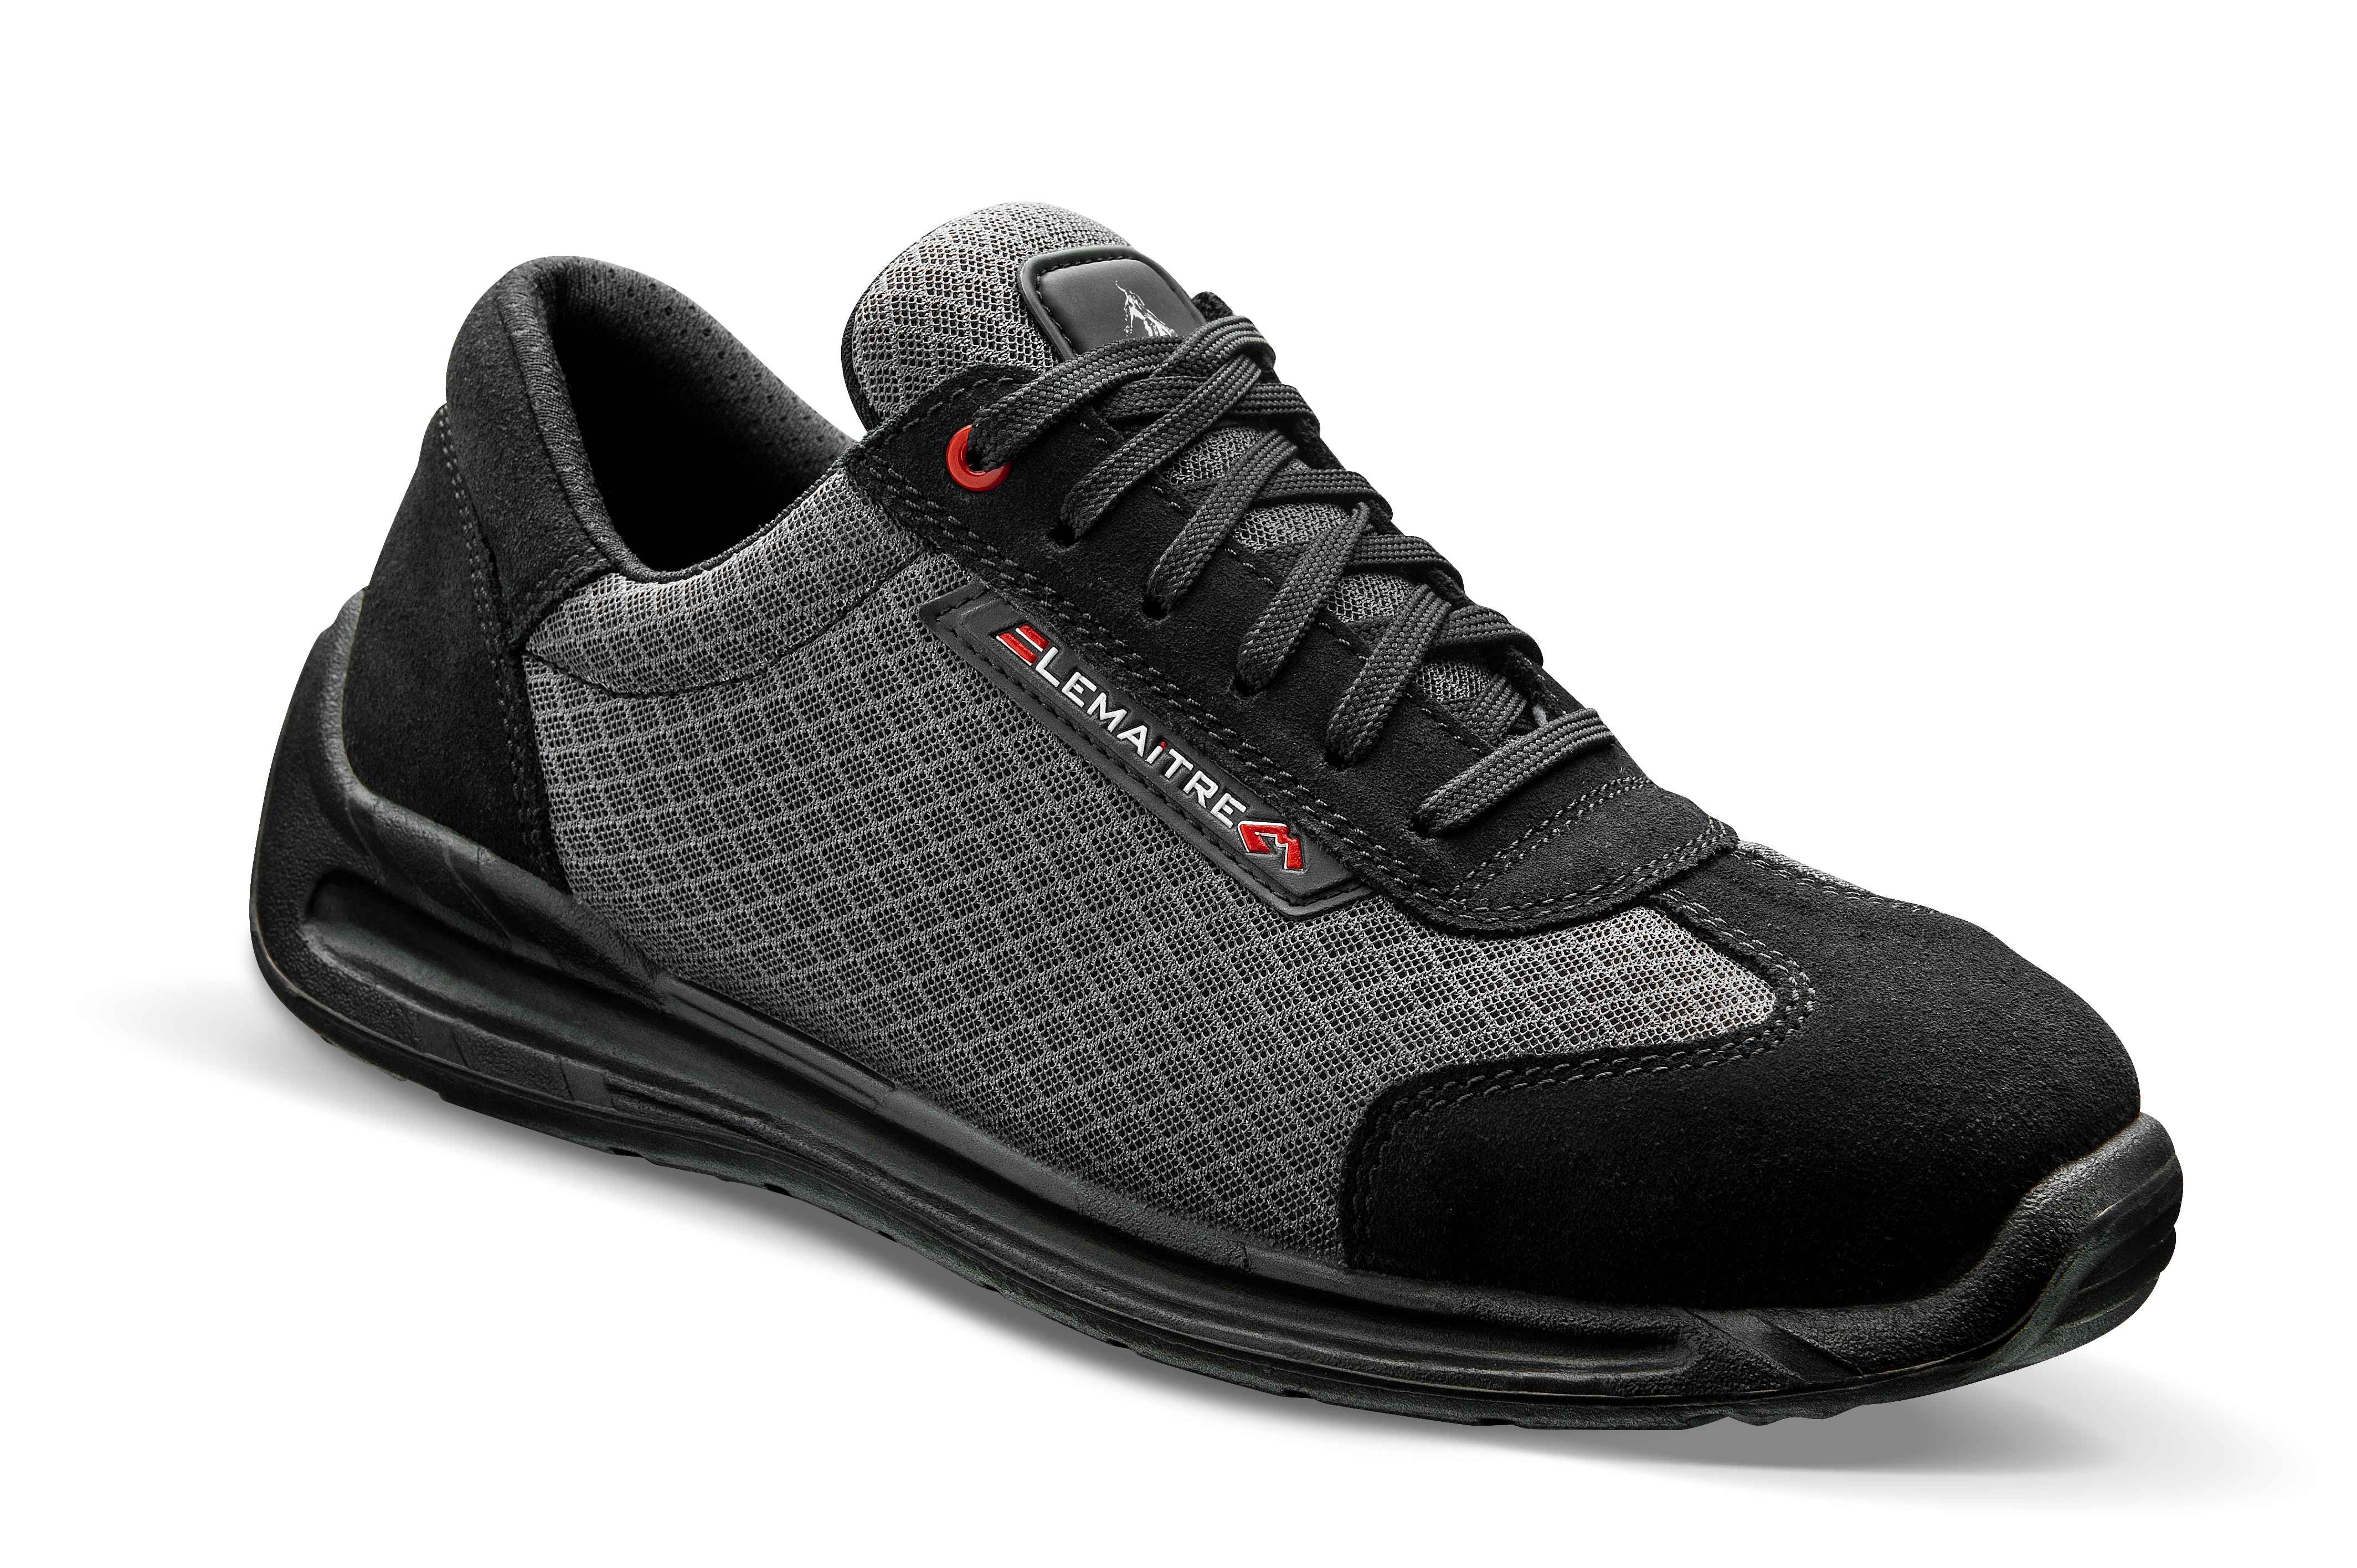 Xenos1pgr42 Lemaitre Securite Xenon Unisex Black Grey Toe Capped Safety Shoes Eu 42 Uk 8 Rs